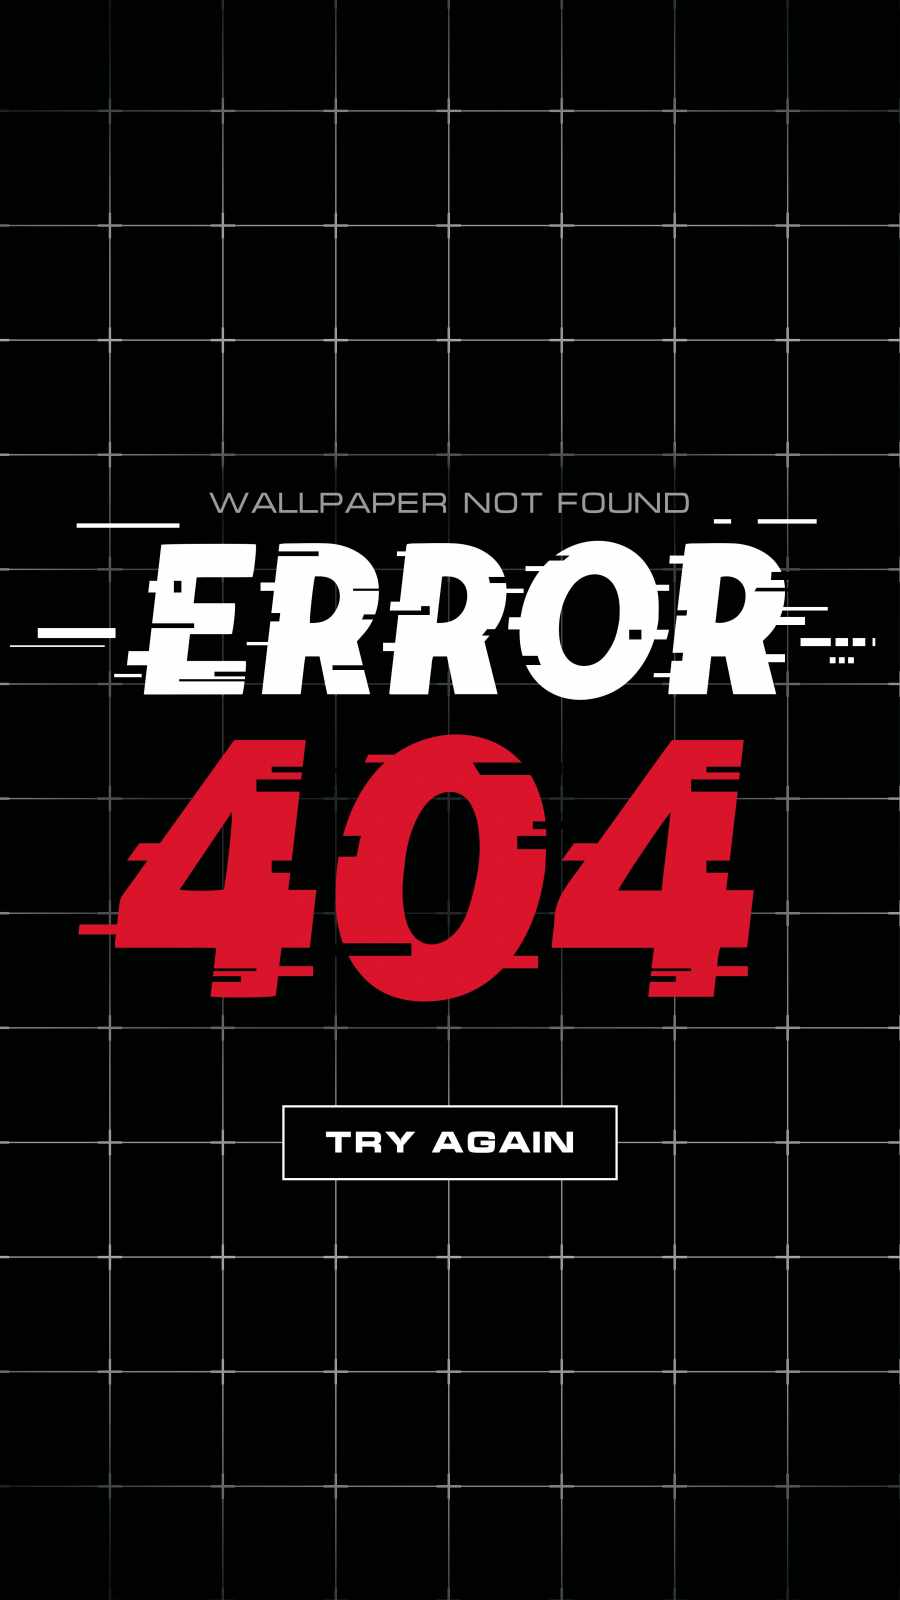 ERROR 404 Wallpaper